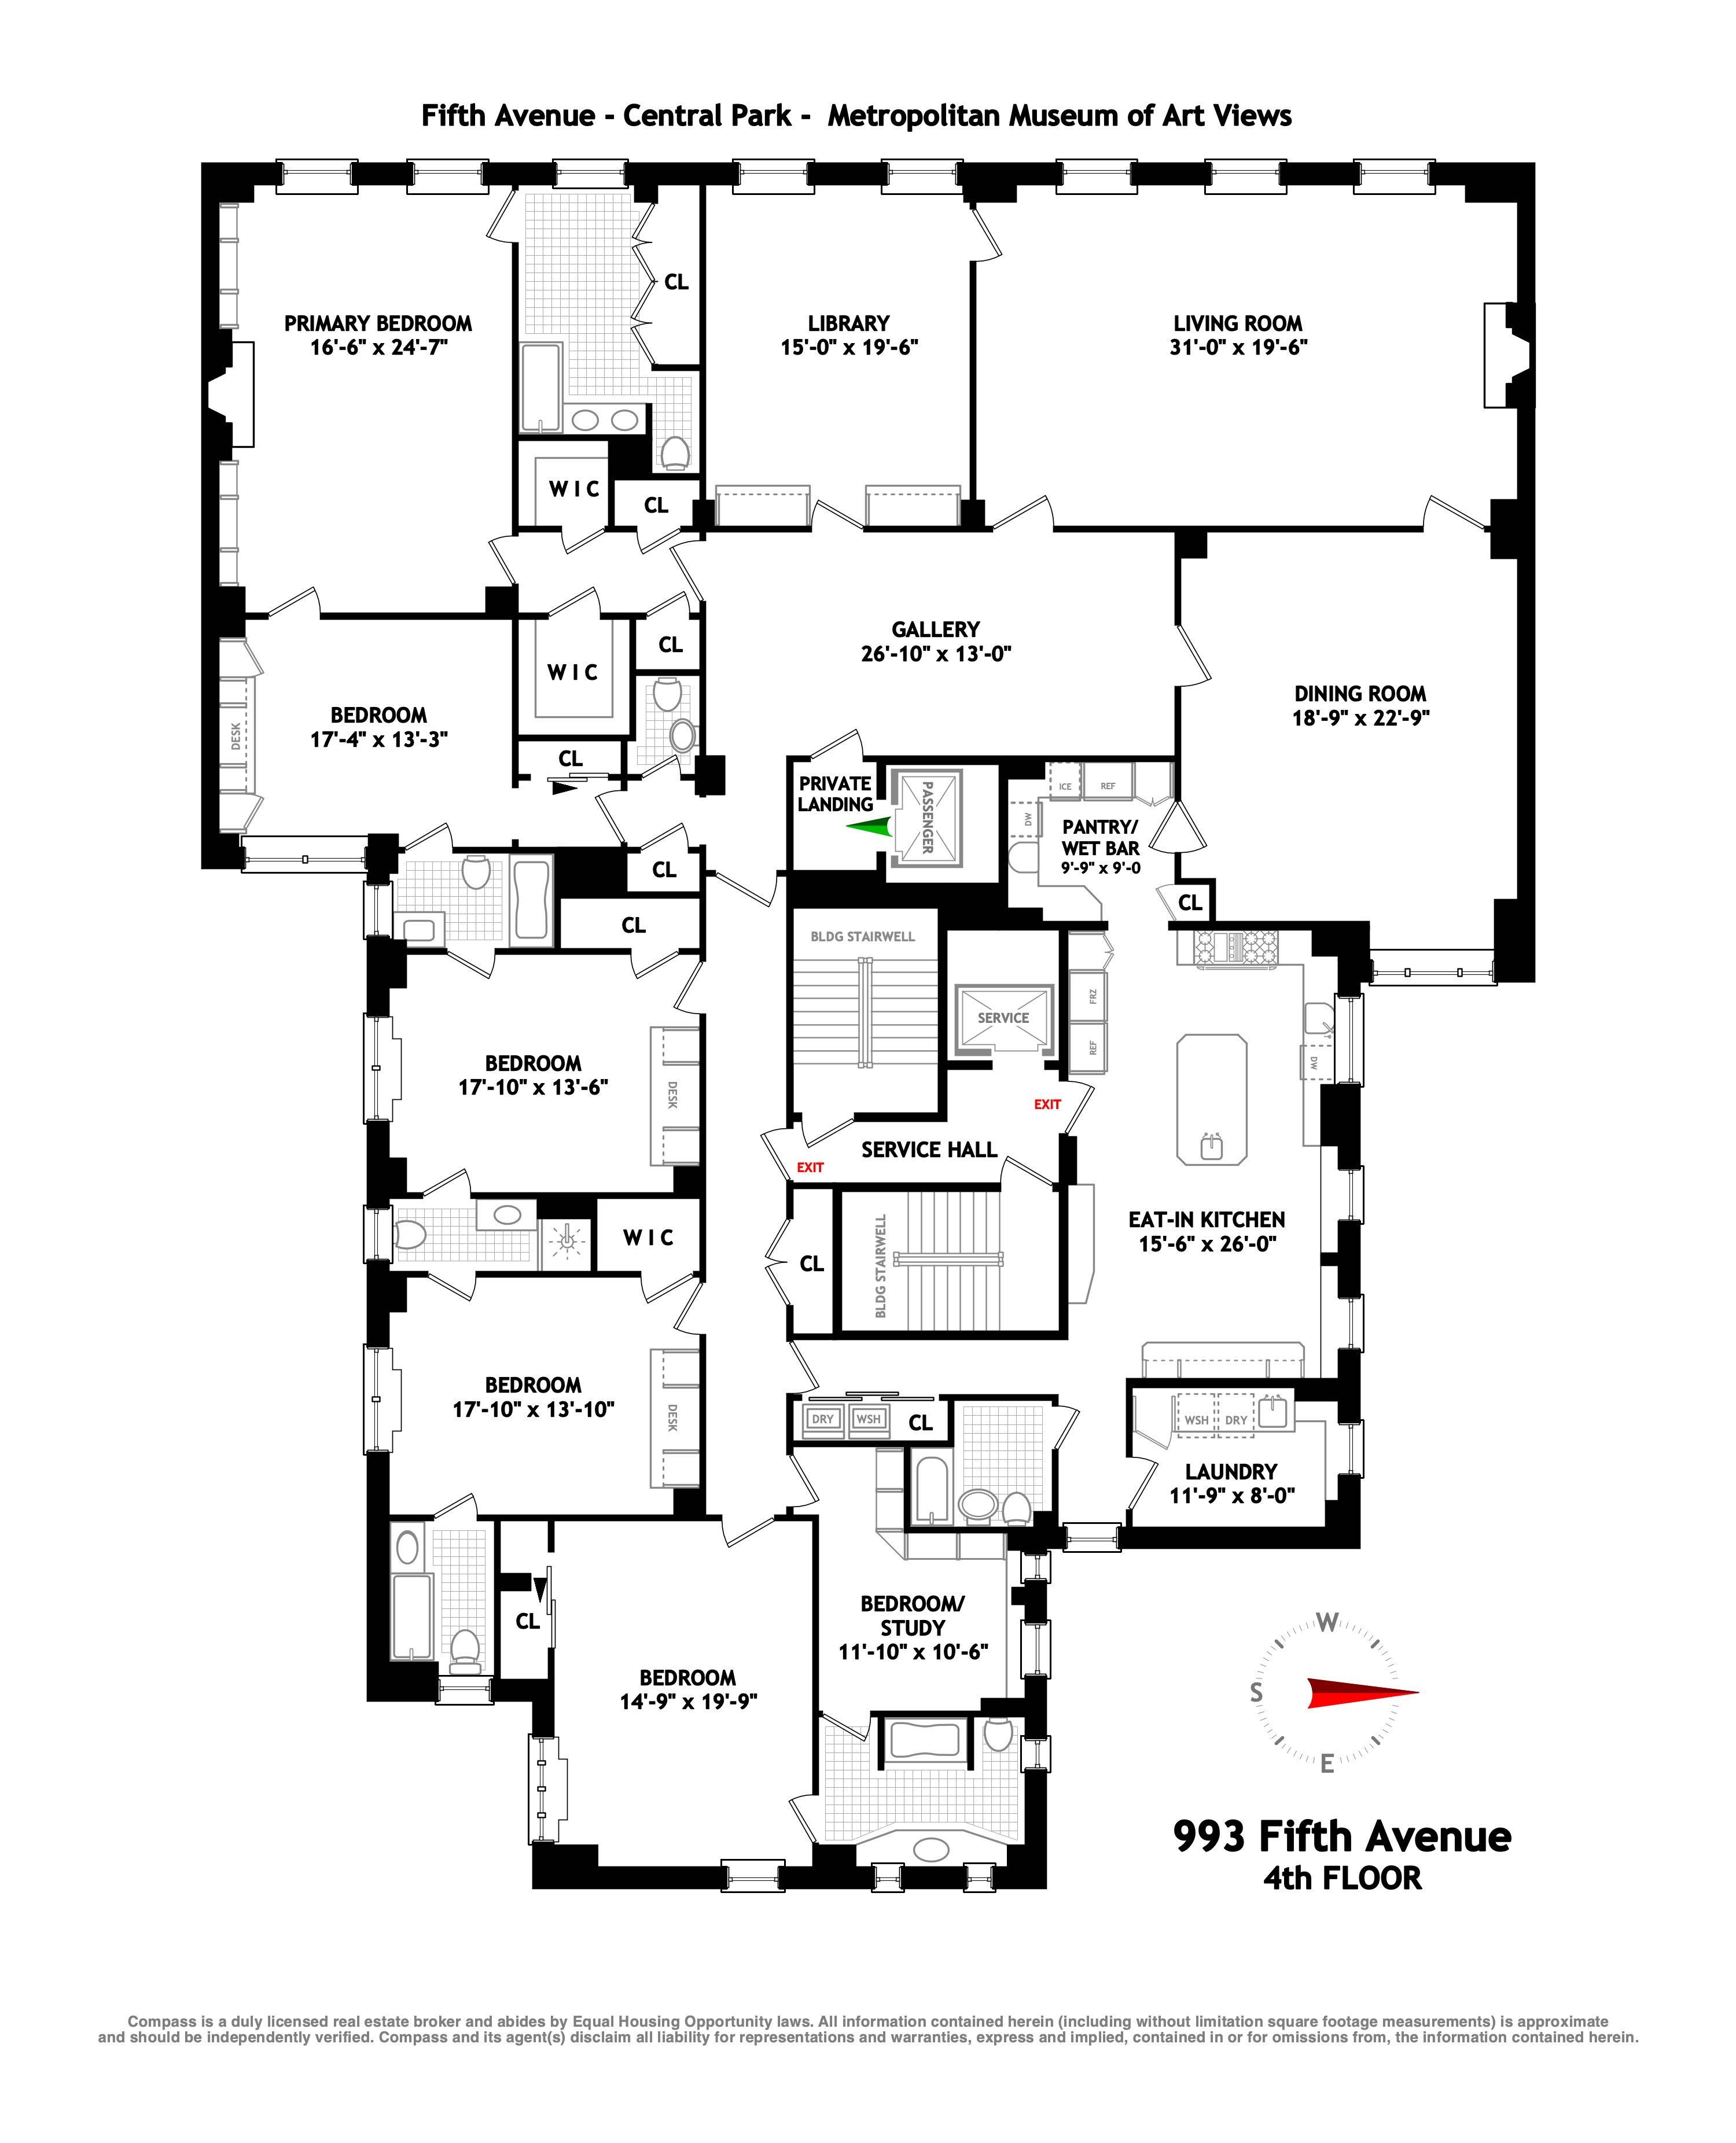 Floorplan for 993 5th Avenue, 4